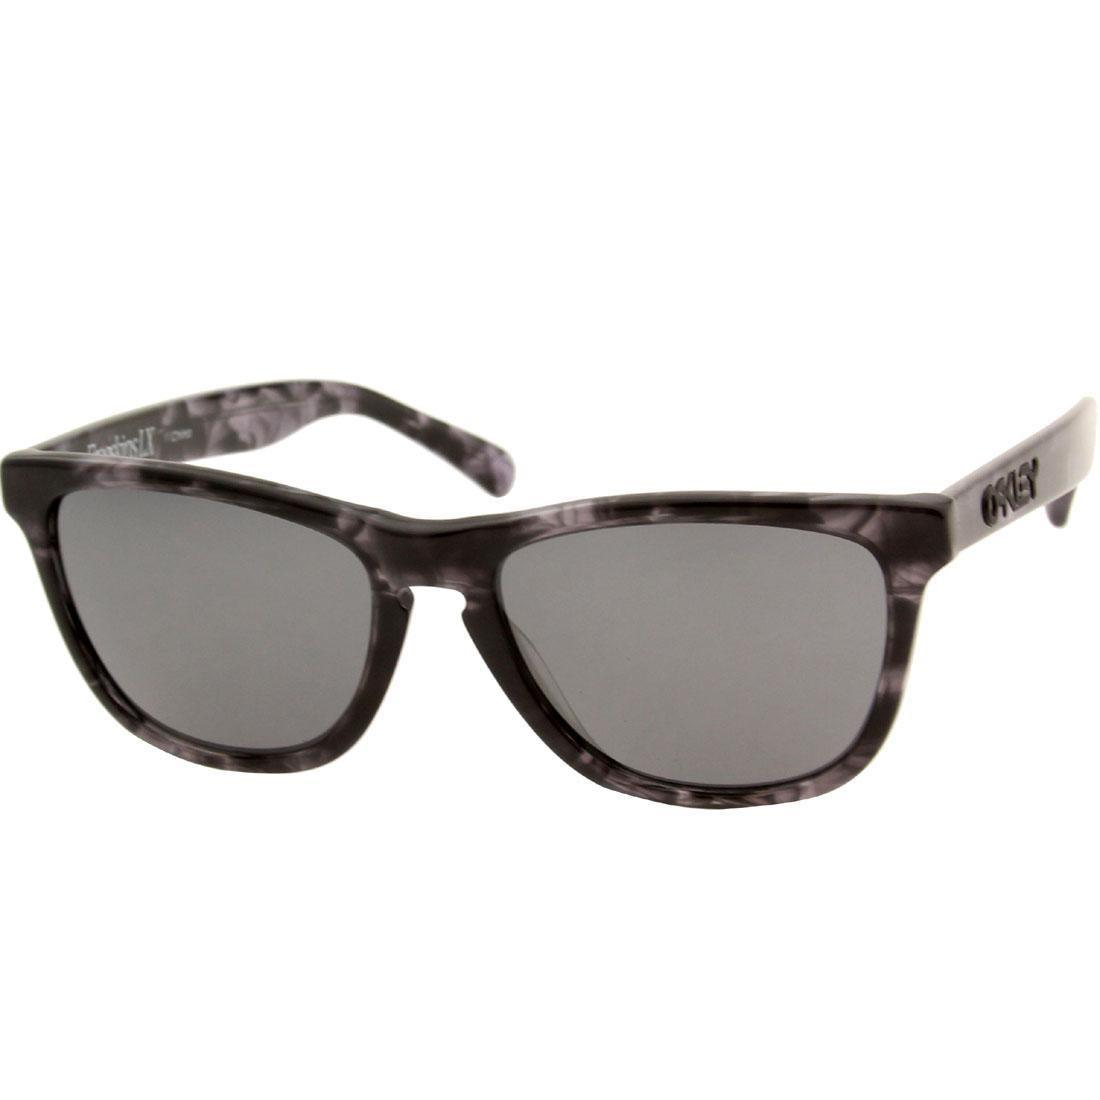 Oakley LX Sunglasses gray tortoise